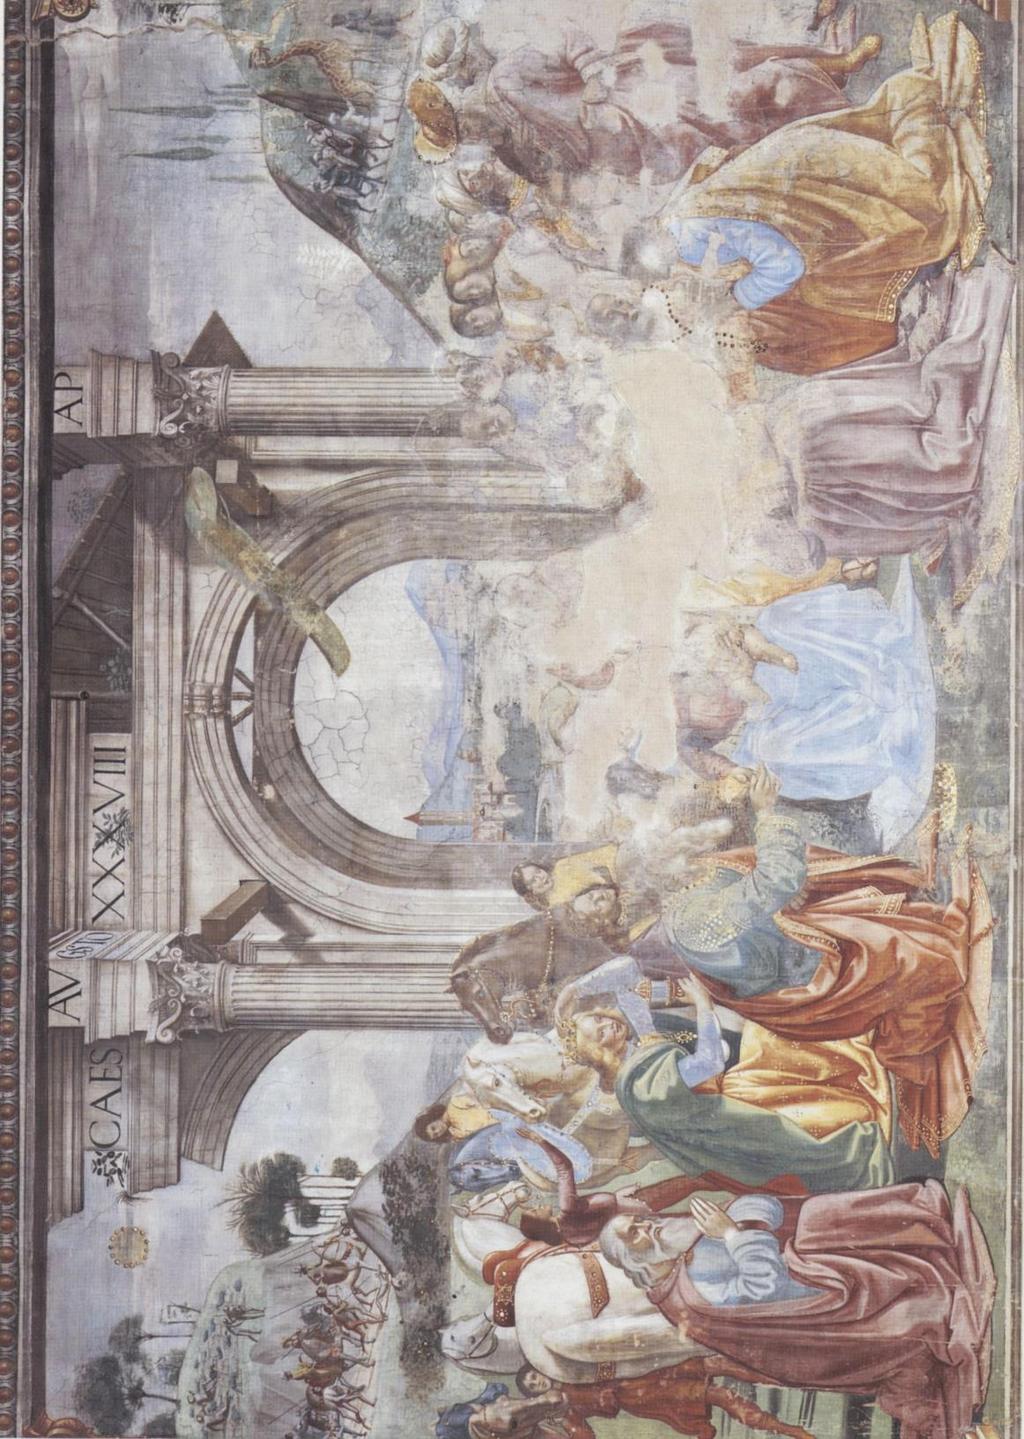 Plate 28: Domenico Bigordi called Ghirlandaio, and workshop, Adoration of the Magi, third